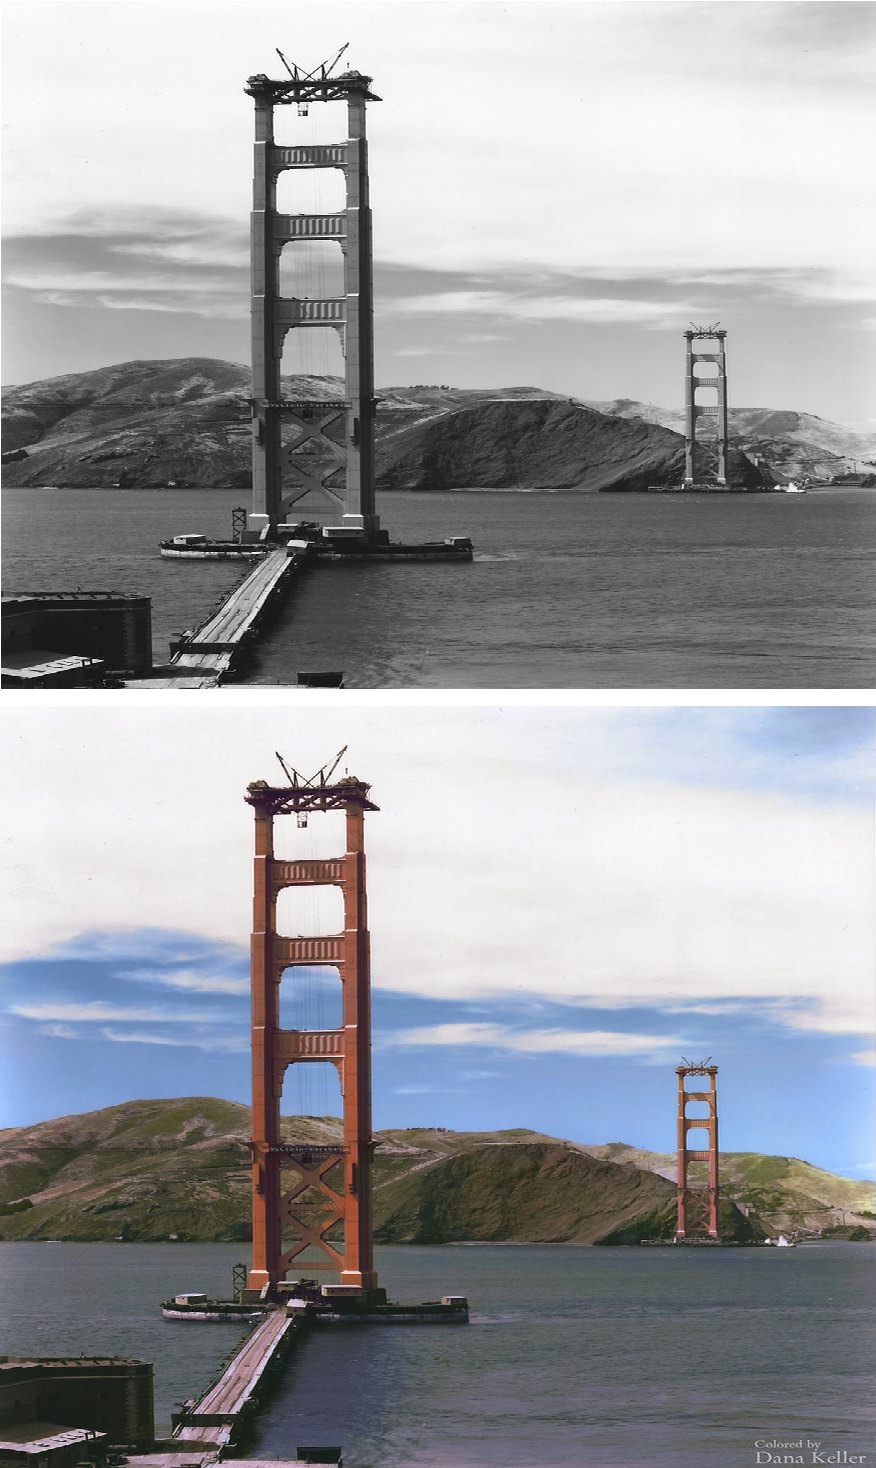 Construction of the Golden Gate Bridge ca 1935